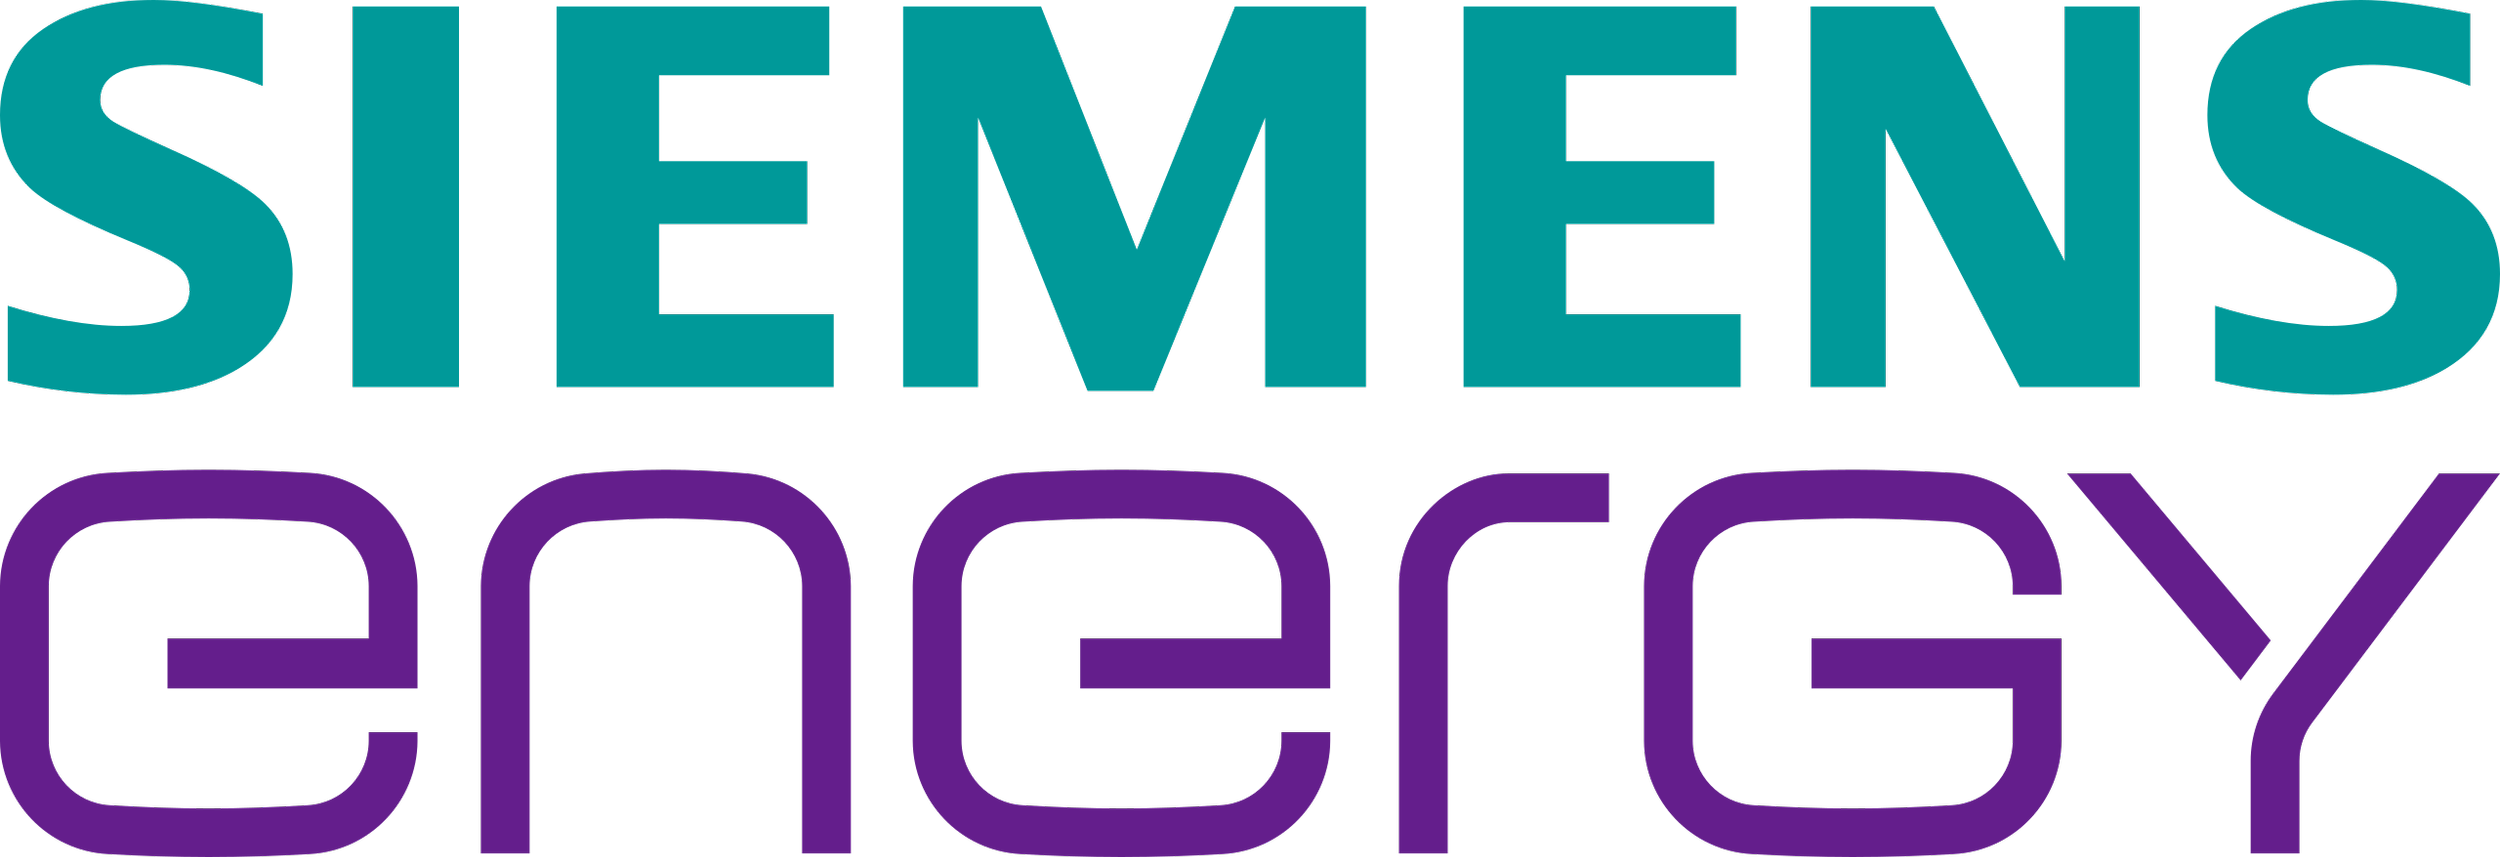 Siemens_Energy_logo.svg.png